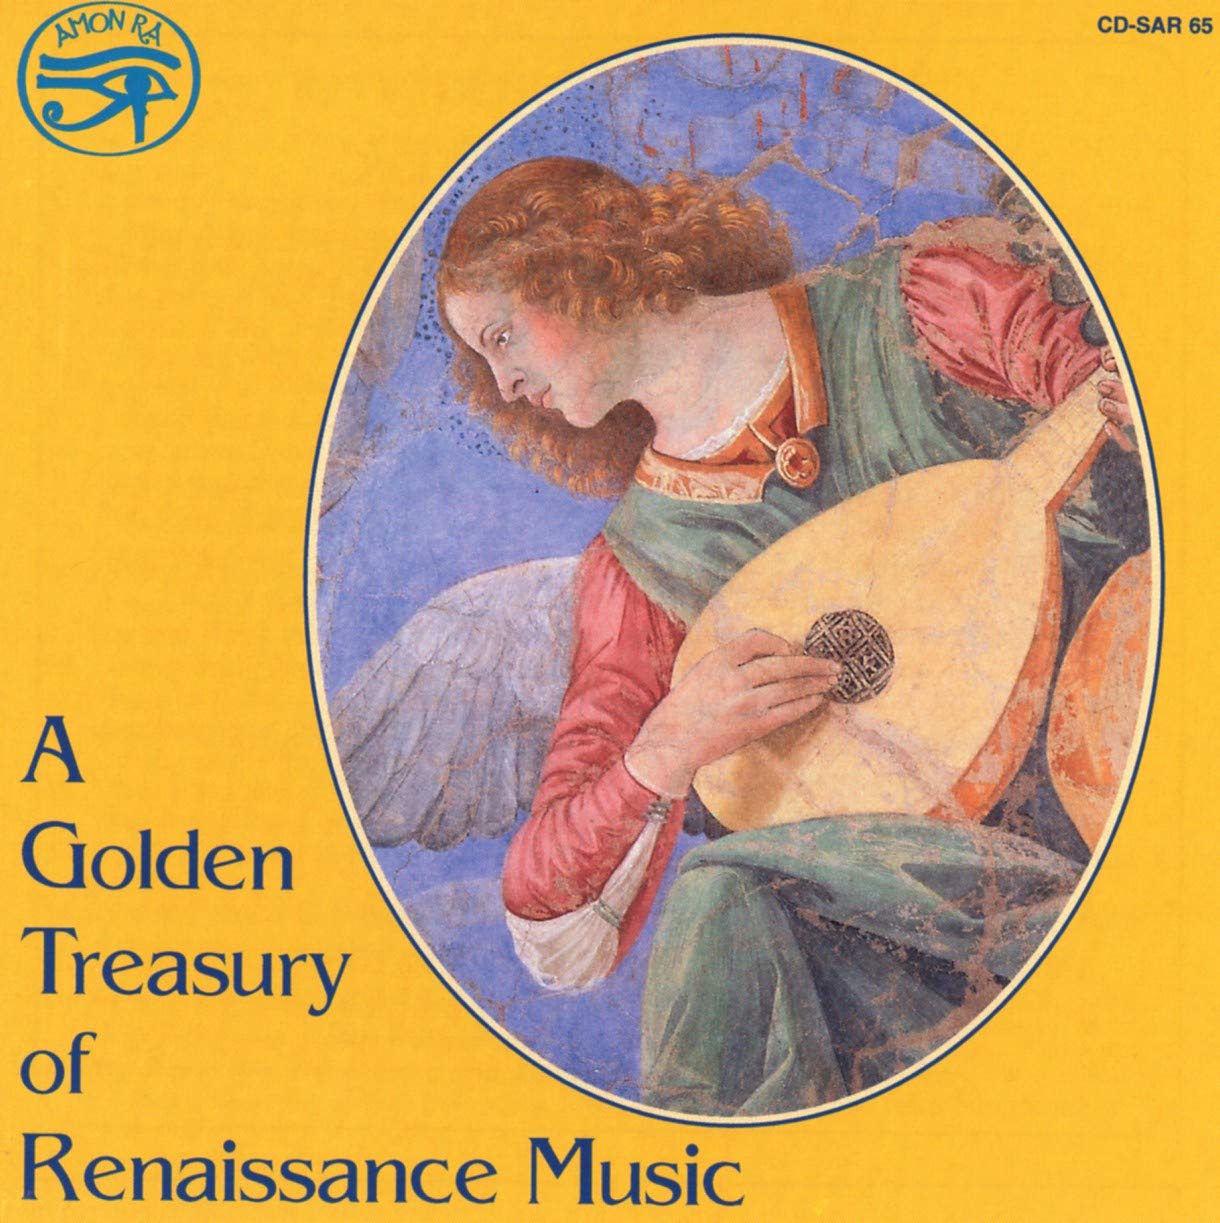 A Golden Treasury of Renaissance Music